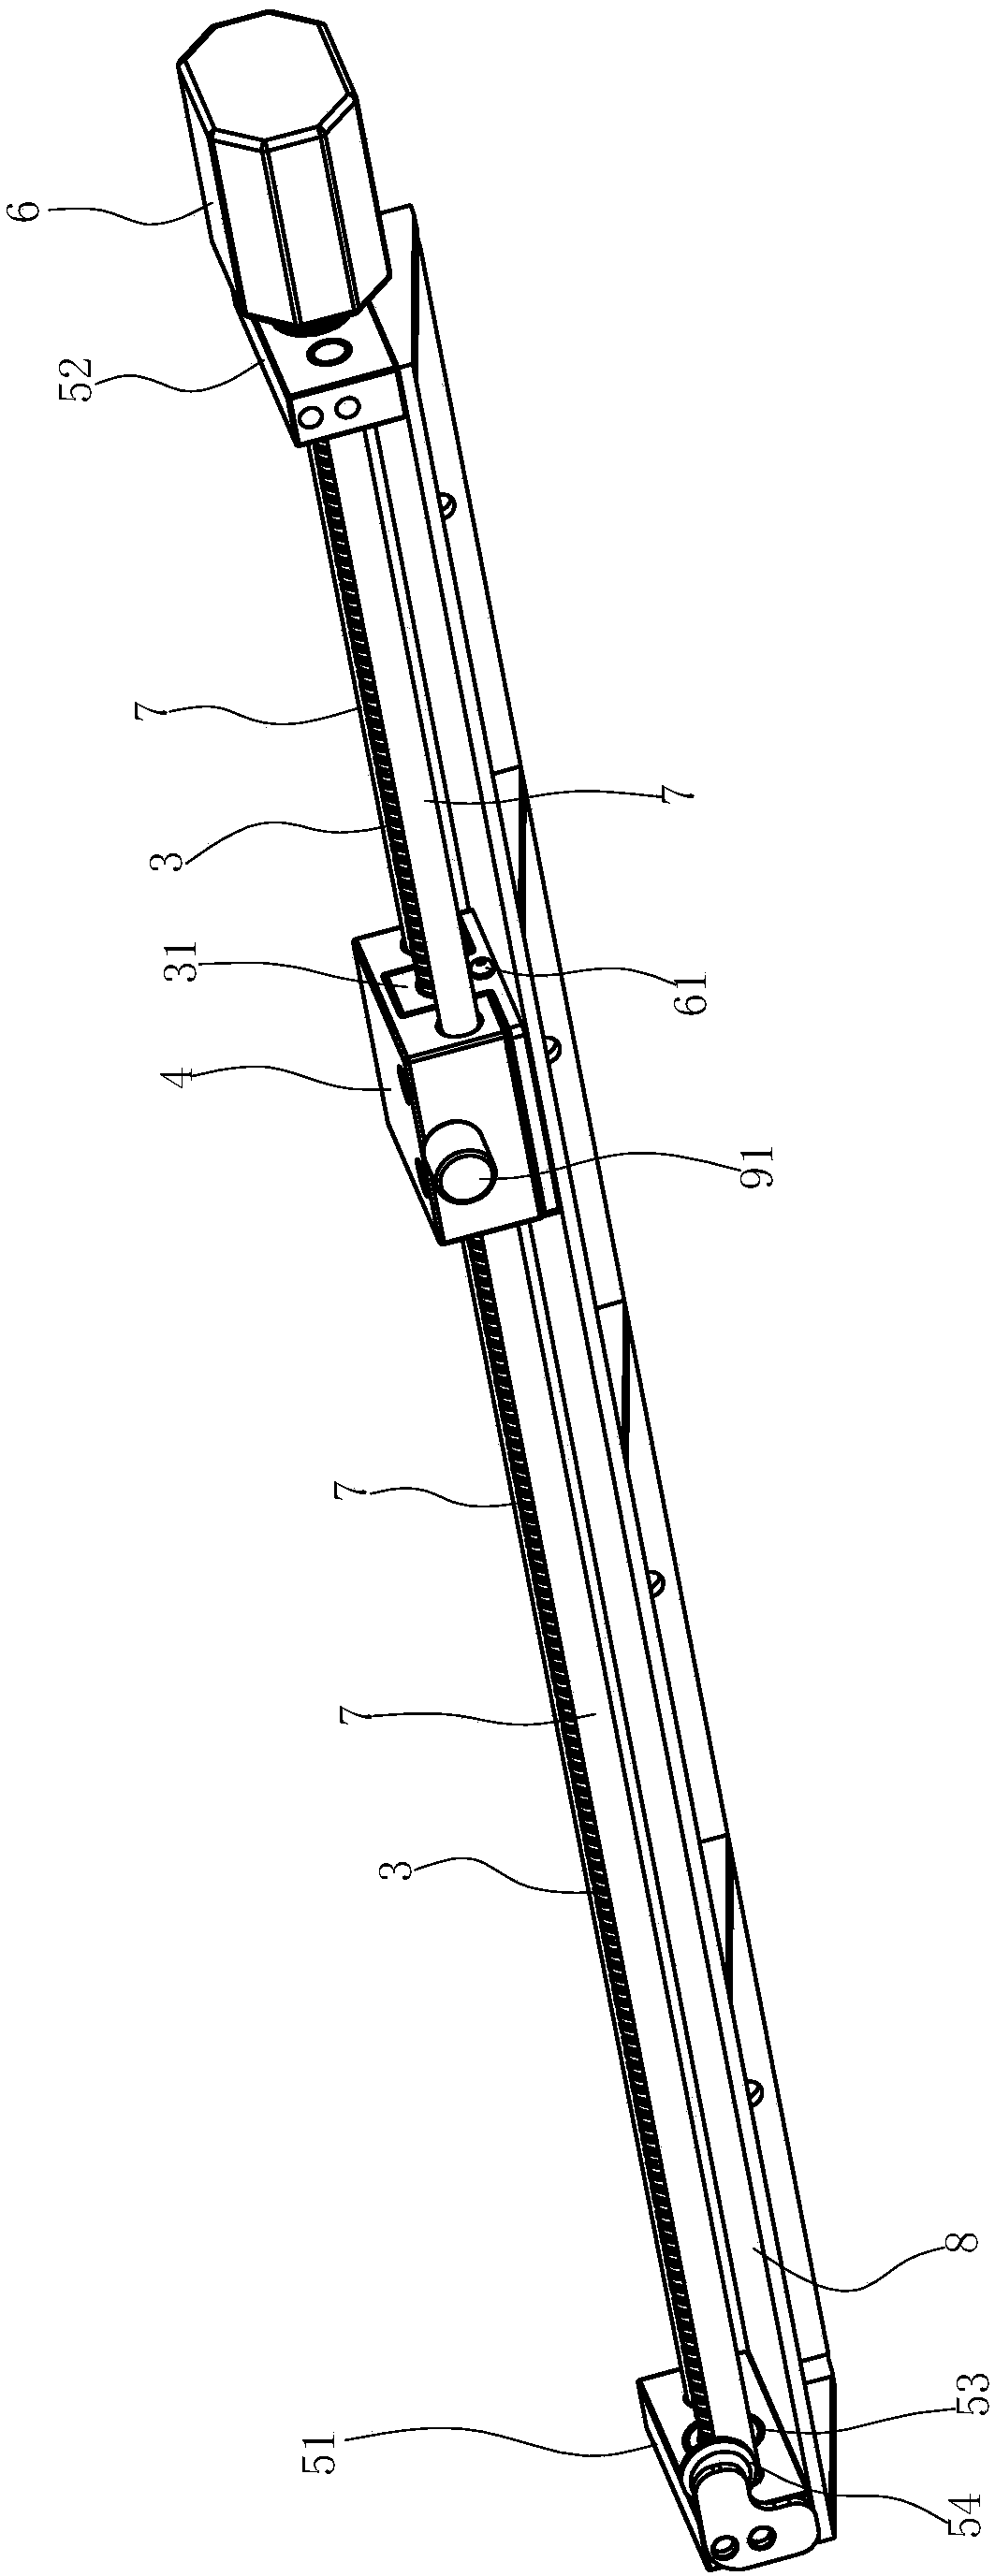 Drawer opening mechanism